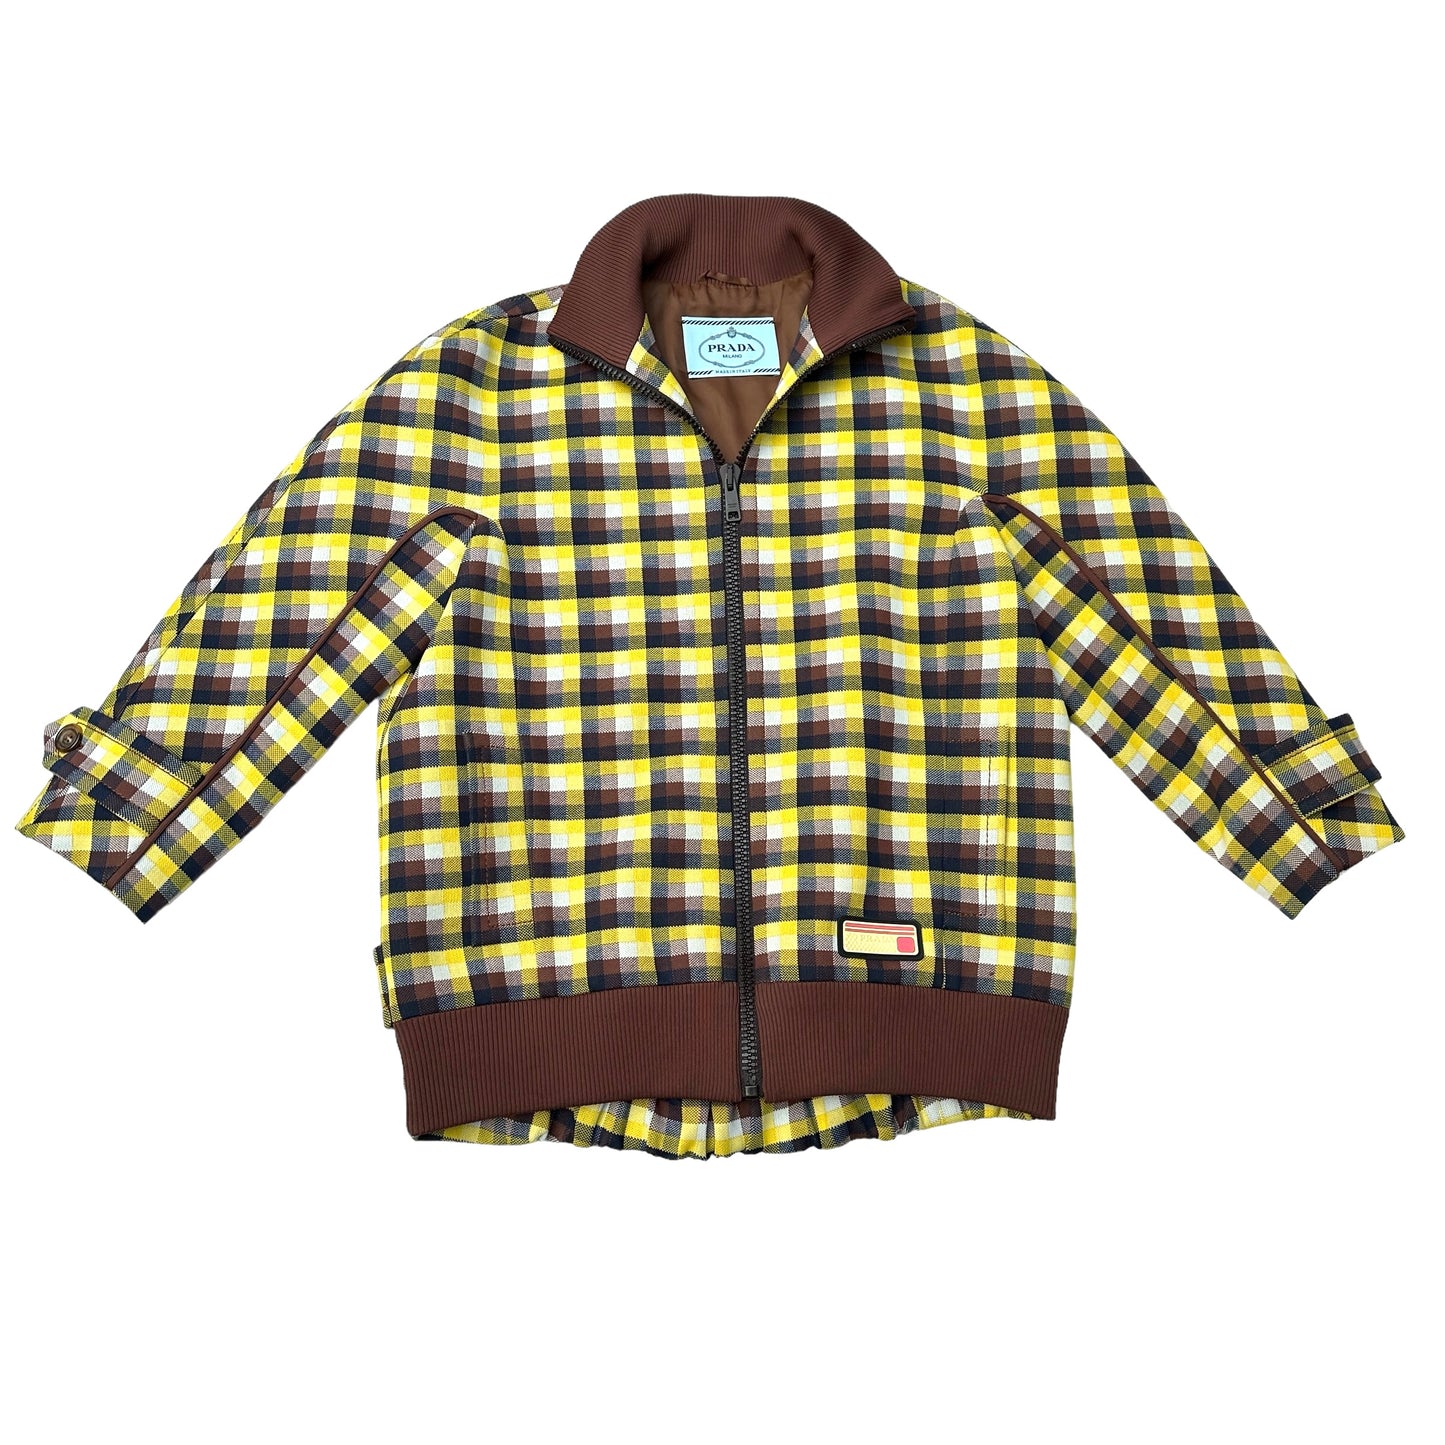 Brown & Yellow Jacket - L